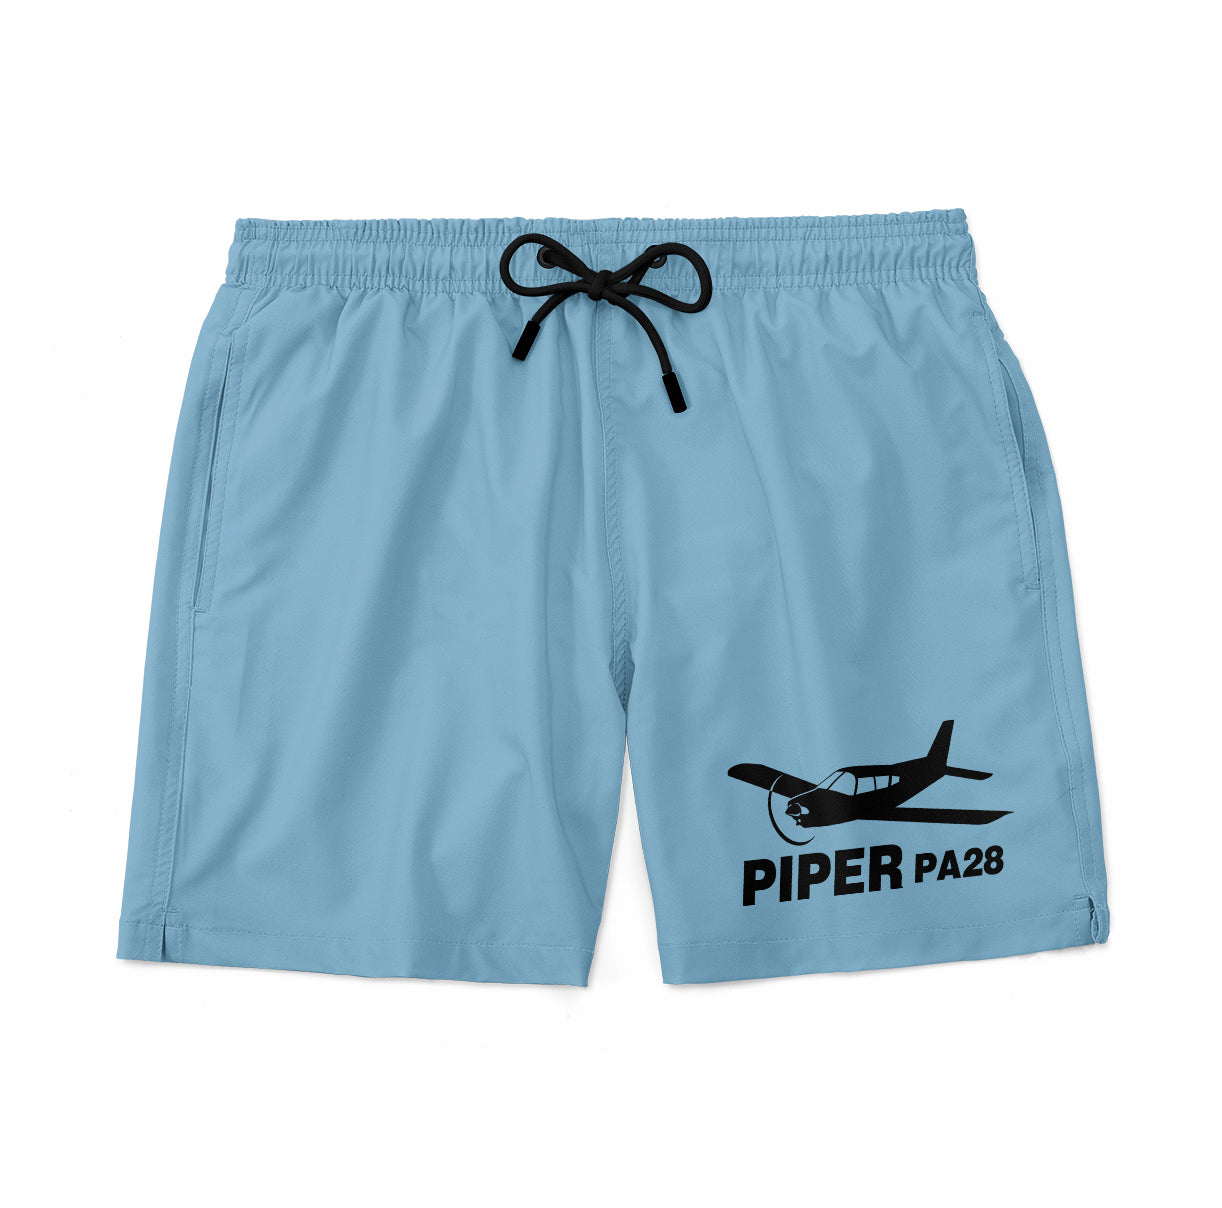 The Piper PA28 Designed Swim Trunks & Shorts